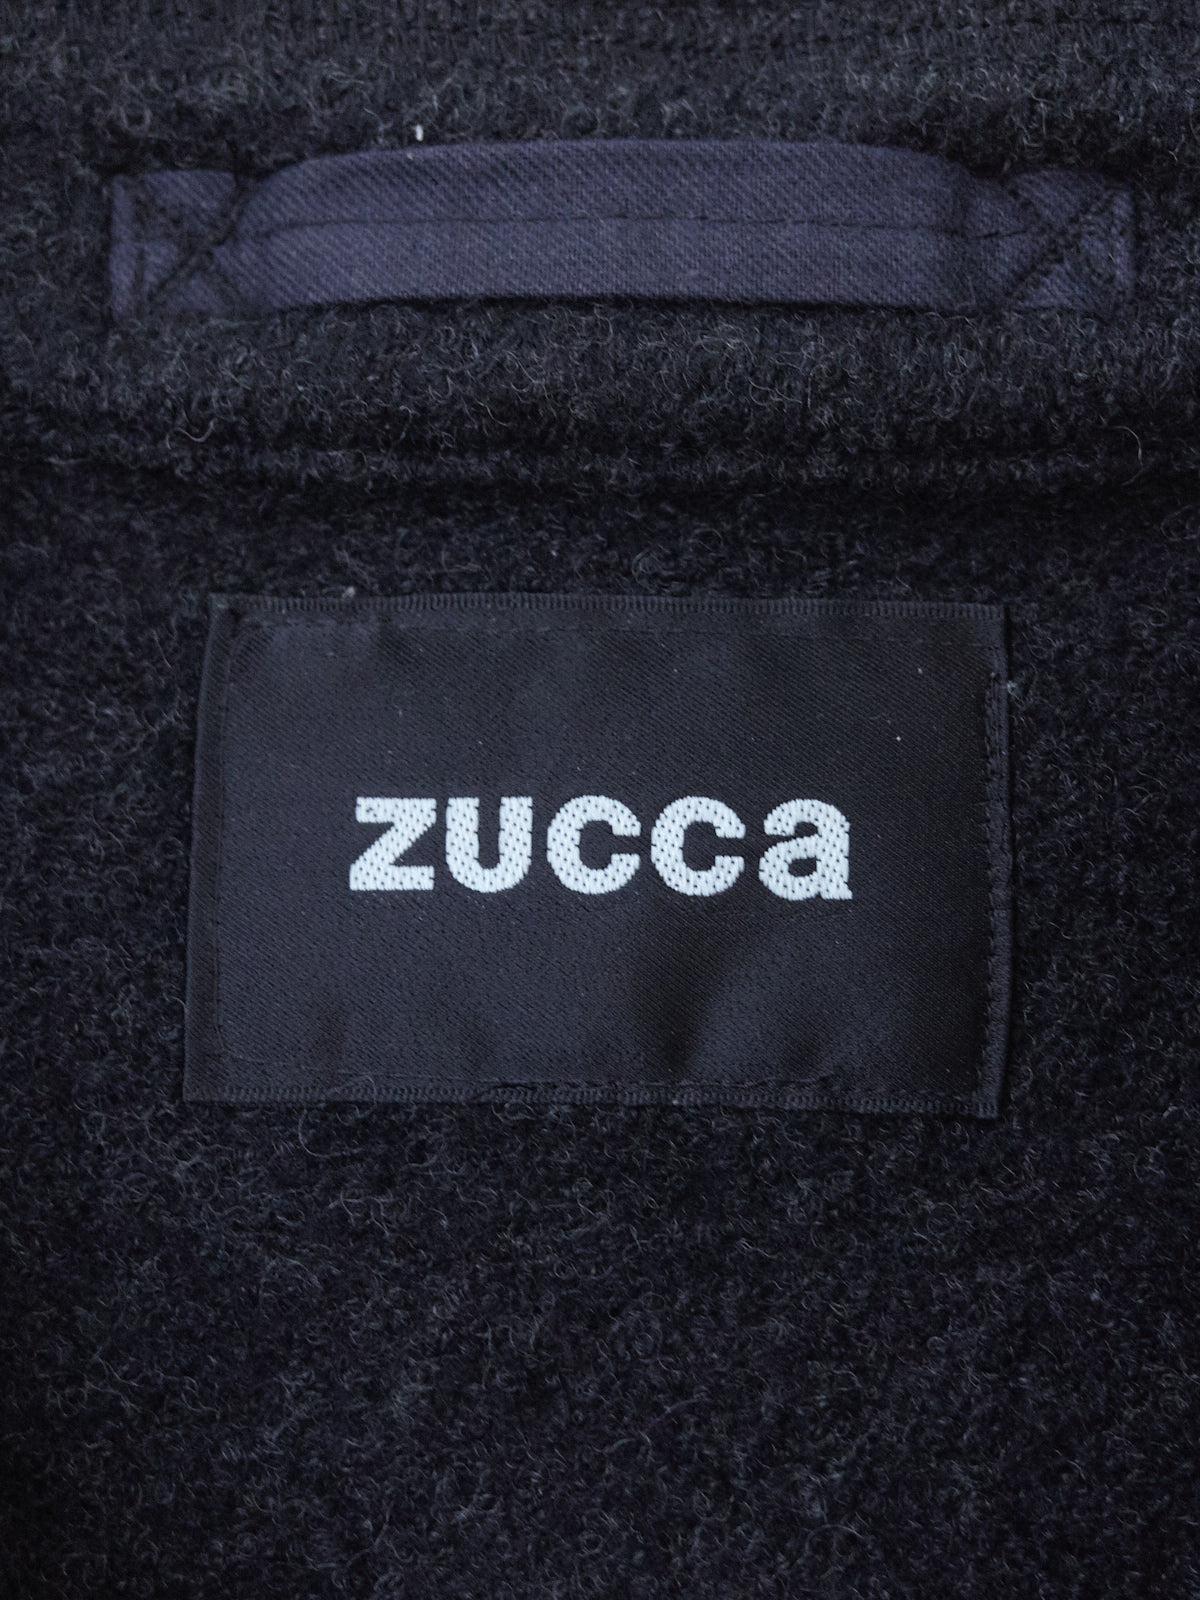 Zucca grey knit wool double pocket bomber jacket - womens S